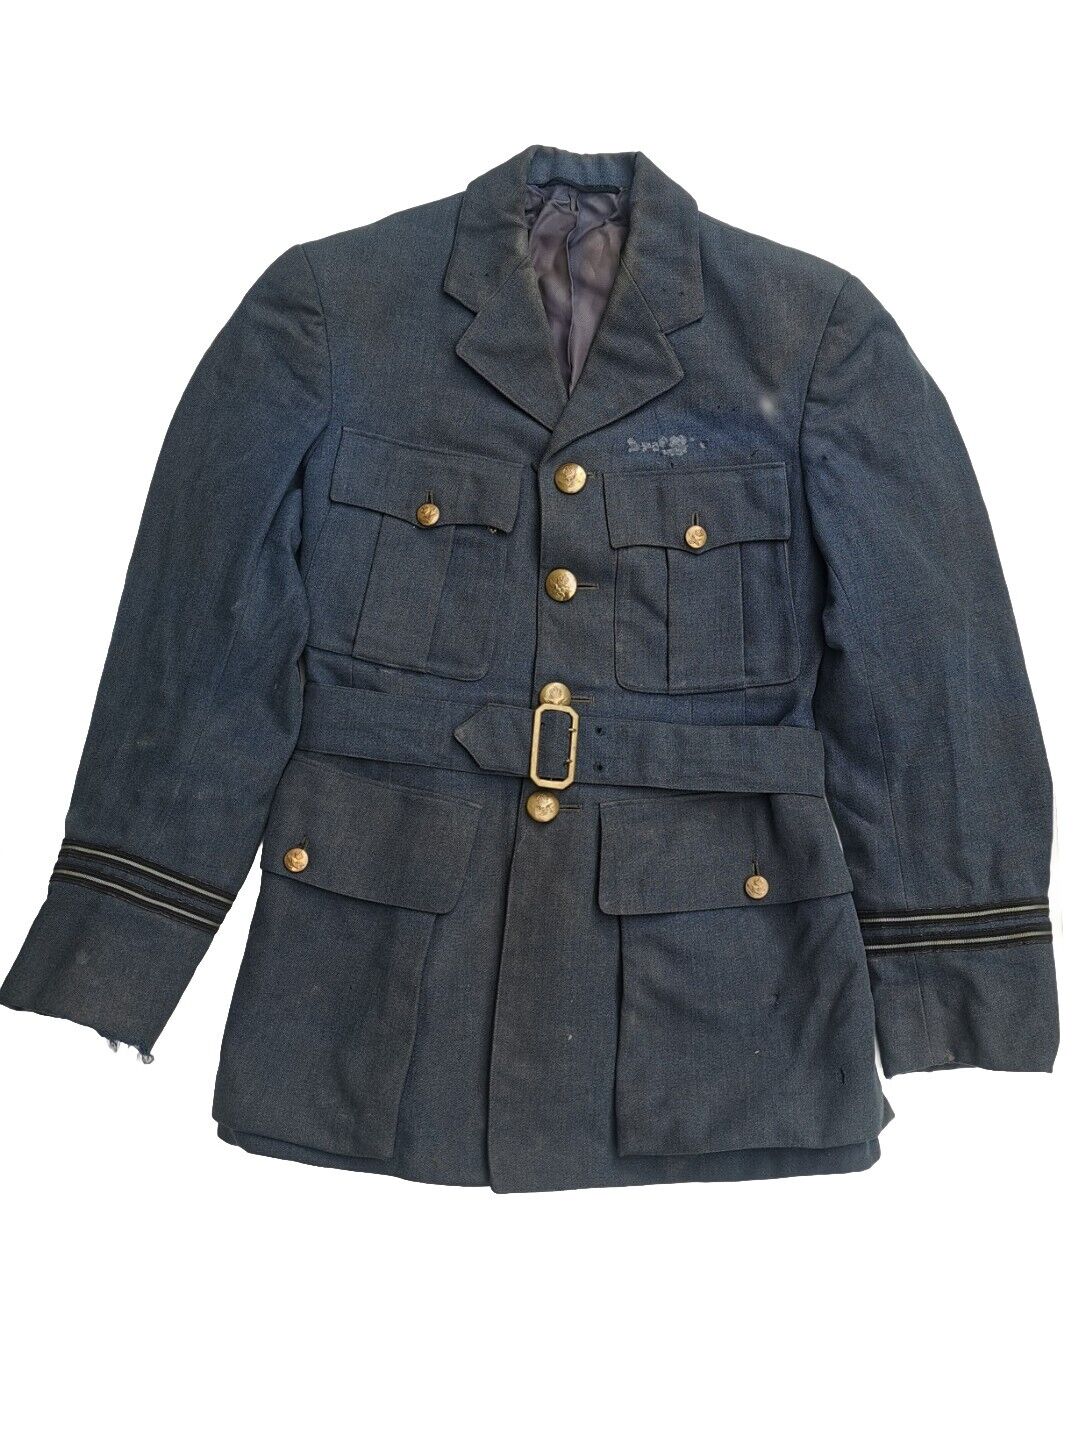 Orginal 1942 Dated WW2 Vintage RAF Officers Jacket Tunic Flight lieutenant